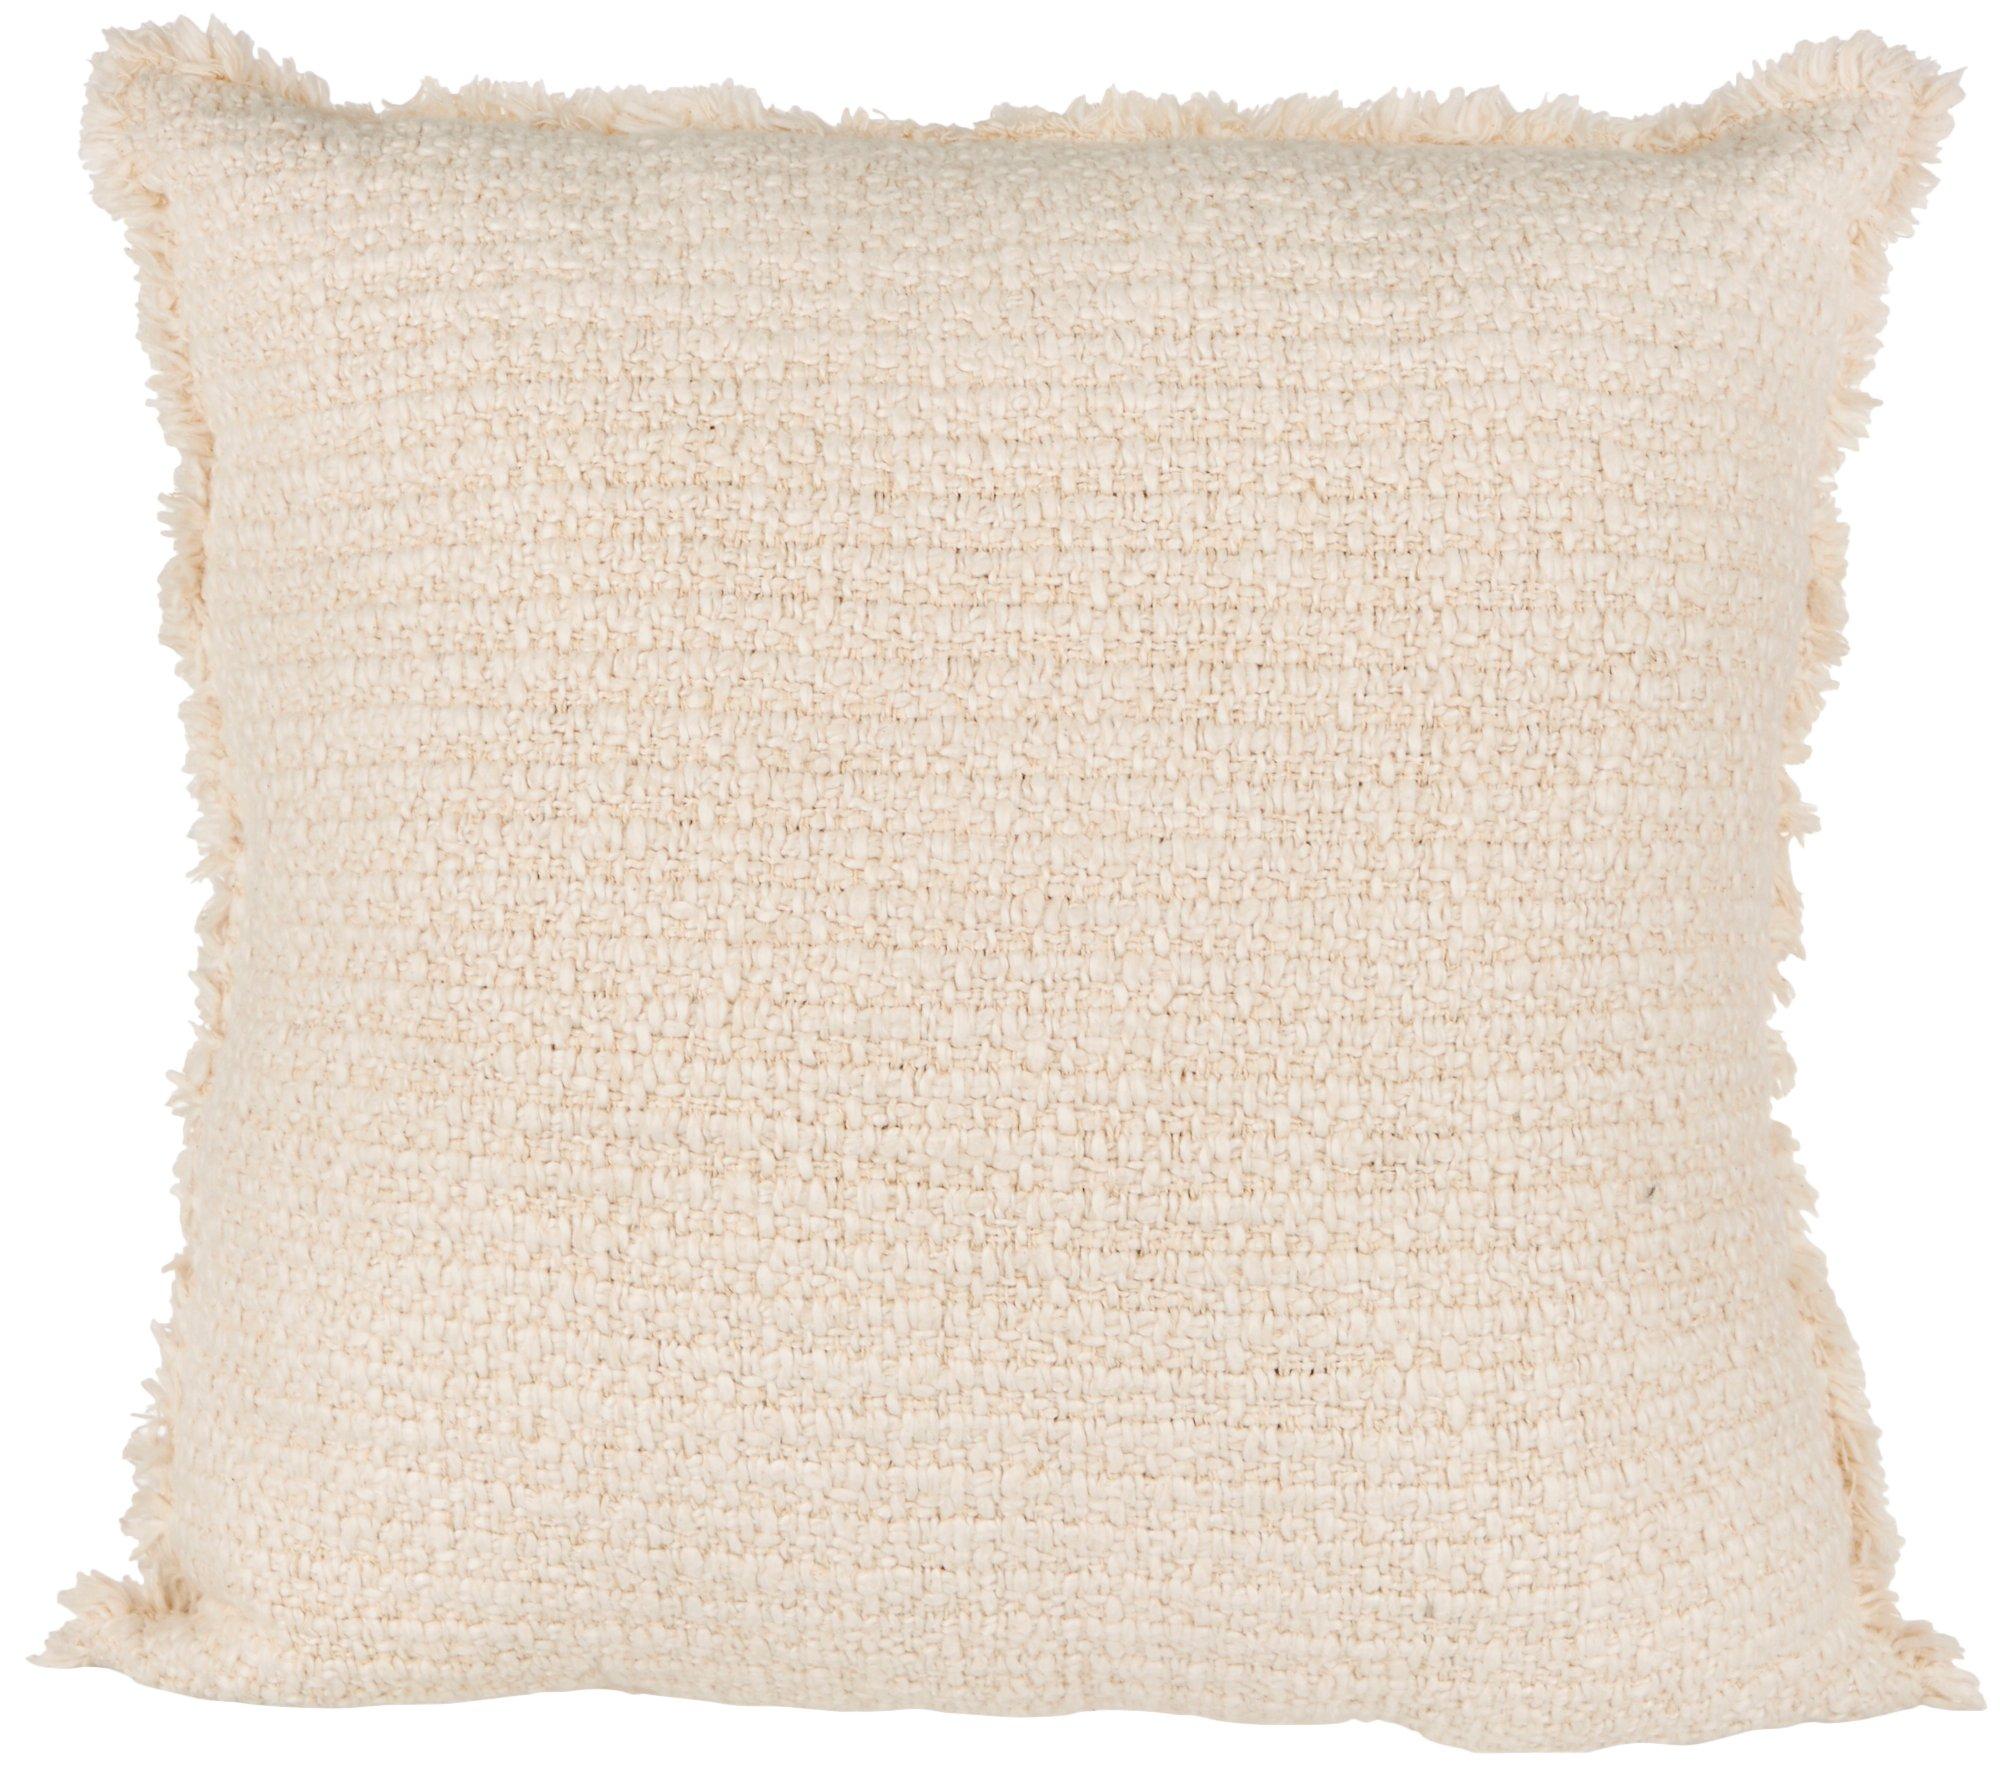 18 x 18 Textured Square Decorative Pillow